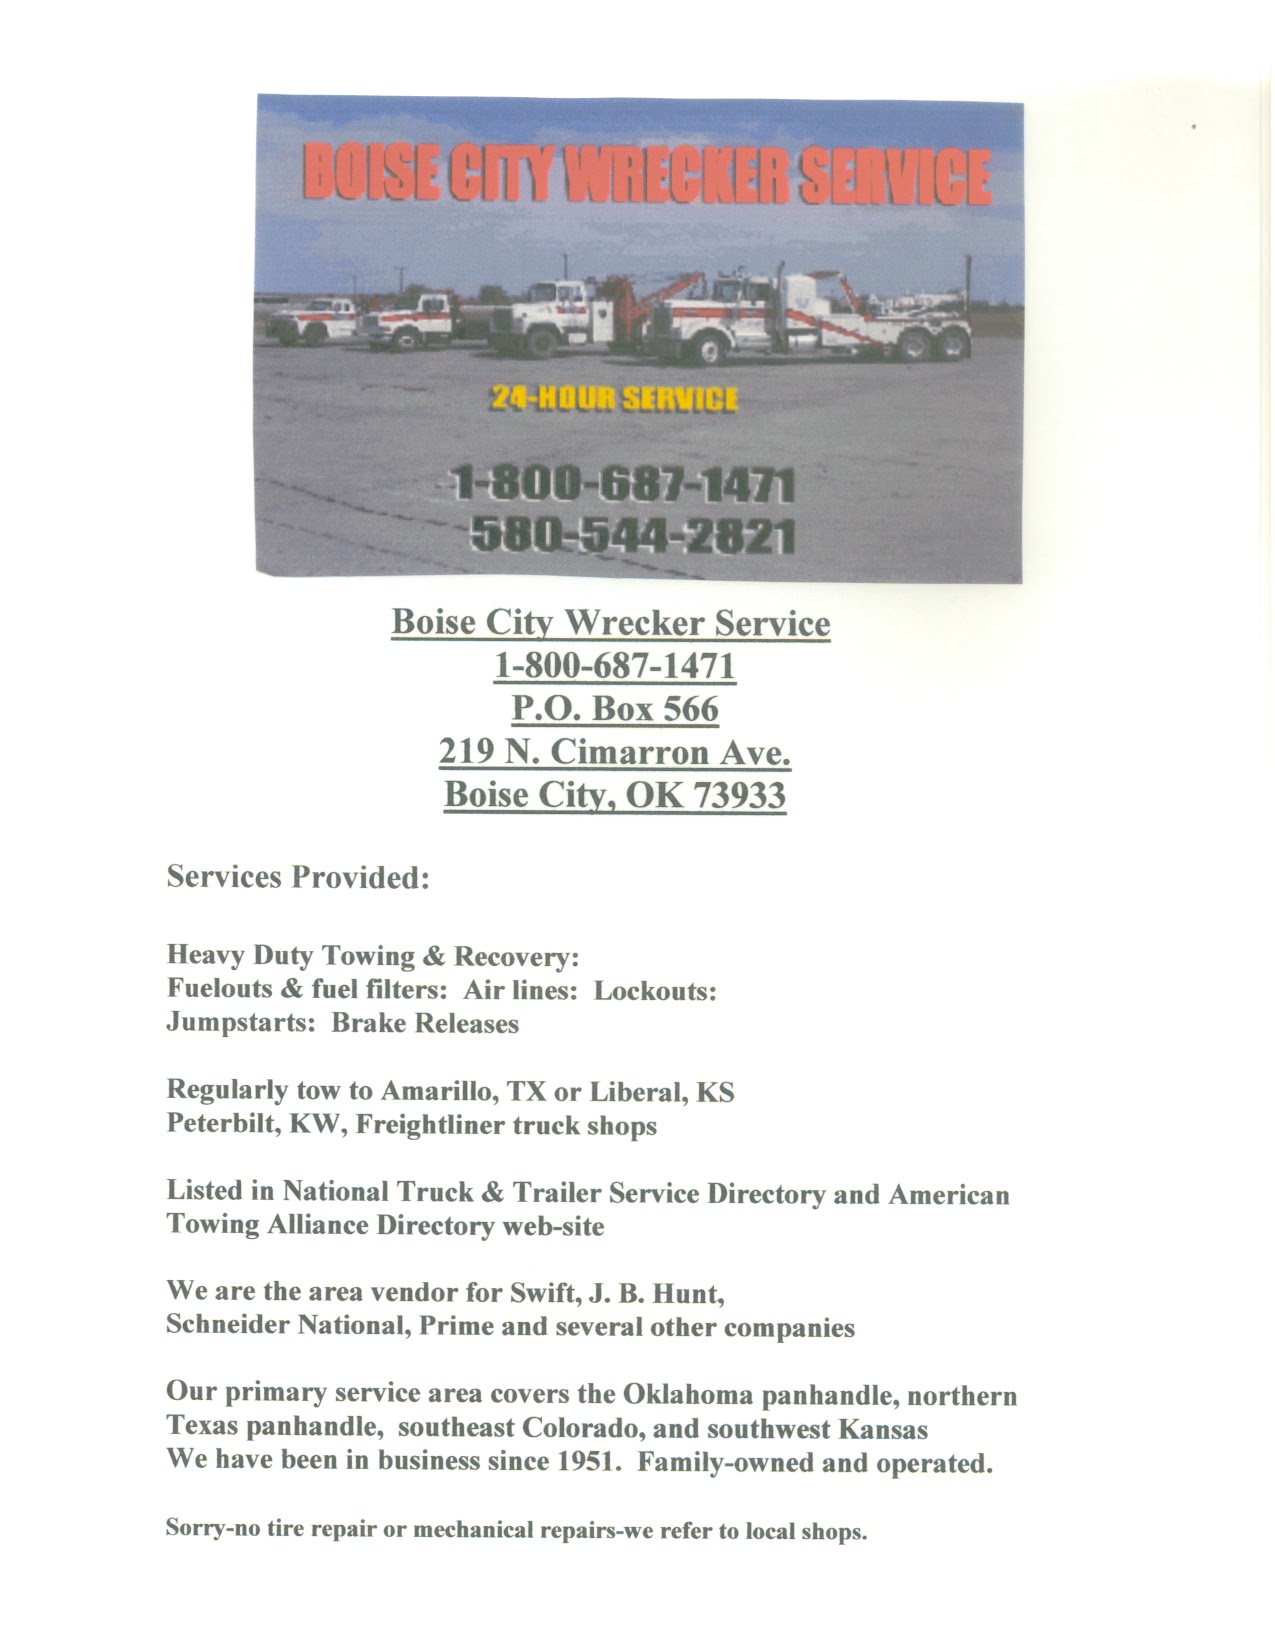 Boise City Body Shop and Wrecker Service 219 N Cimarron Ave, Boise City Oklahoma 73933